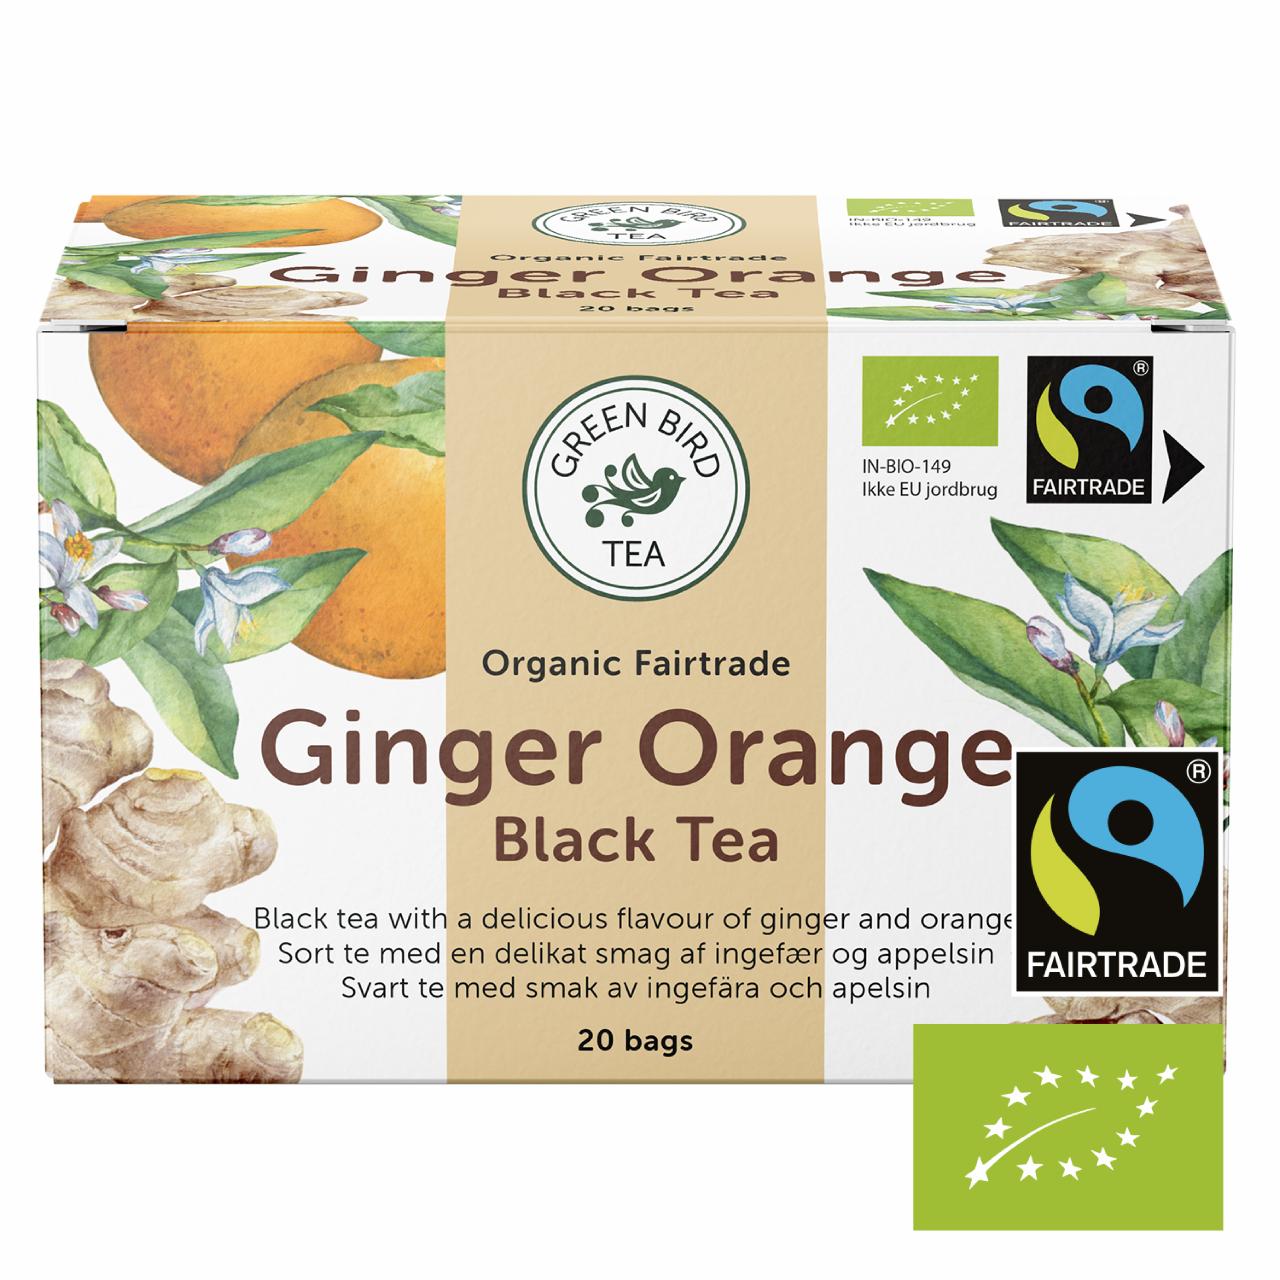 Green Bird Ginger Orange Black Tea Økologisk Fairtrade 